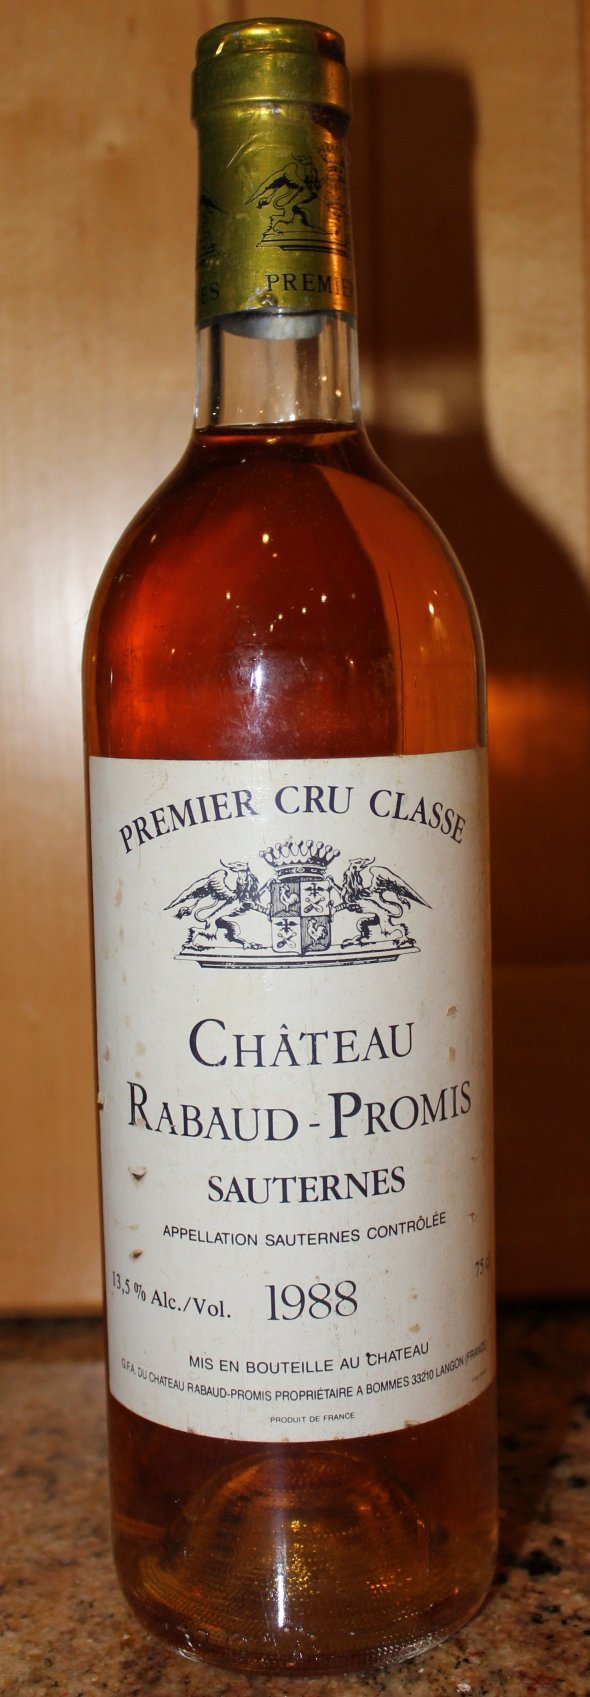 Rabaud Promis, Bordeaux, Sauternes, France, AOC, 1er Cru Classe